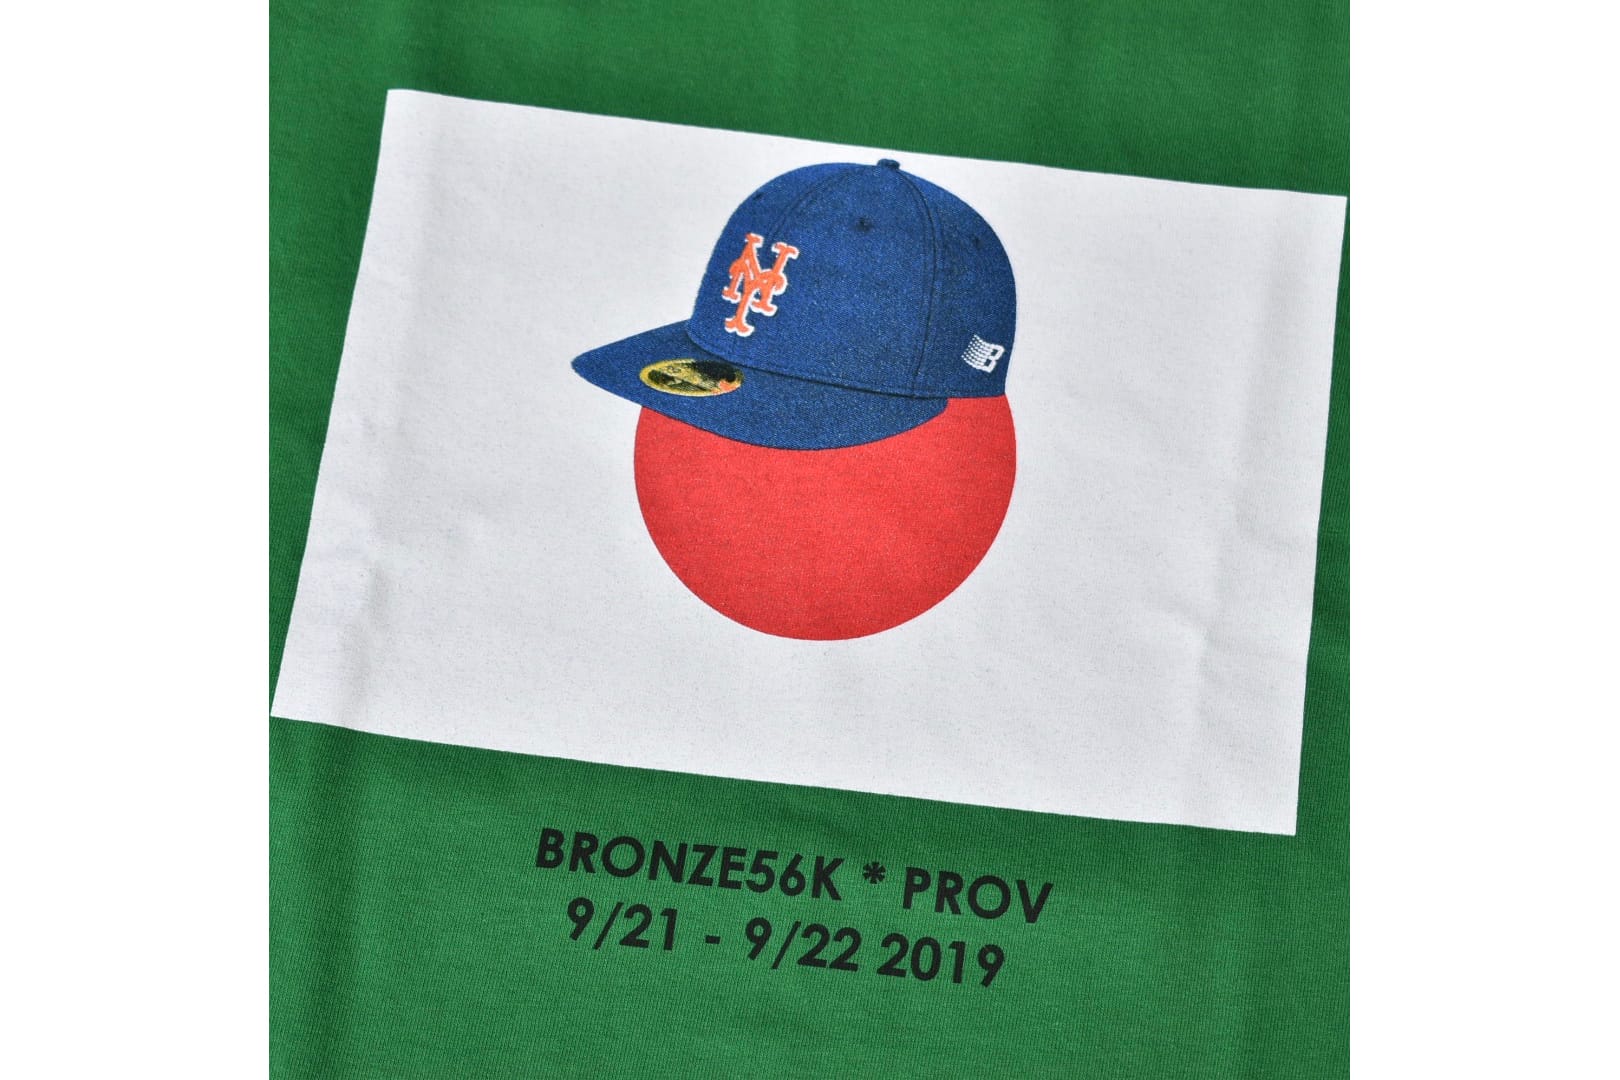 Bronze 56k / 2019年PROV限定復刻デザイン